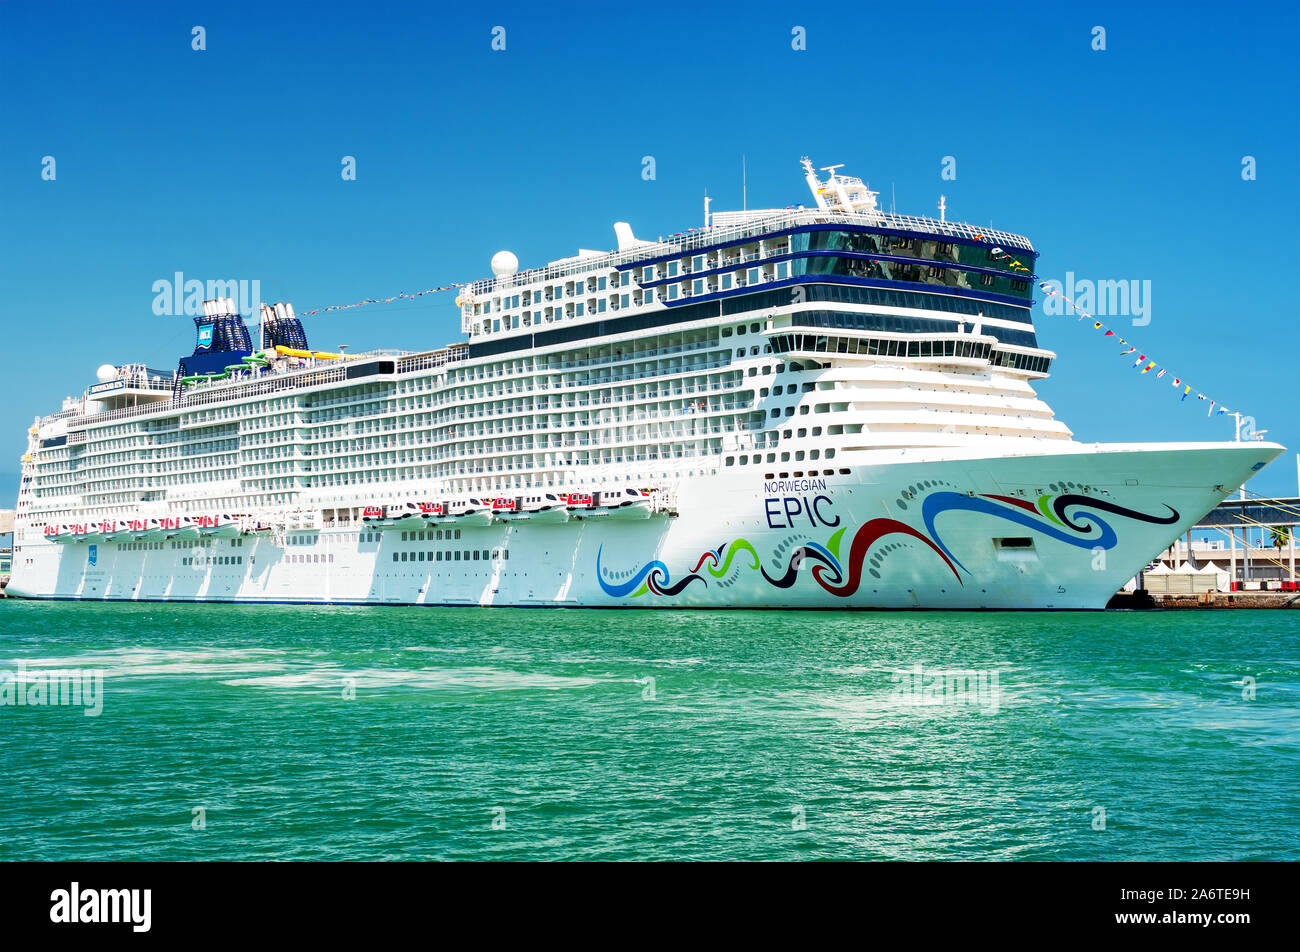 Barcelona, Spain - August 6, 2017: Norwegian Epic cruise ship at Barcelona port Stock Photo